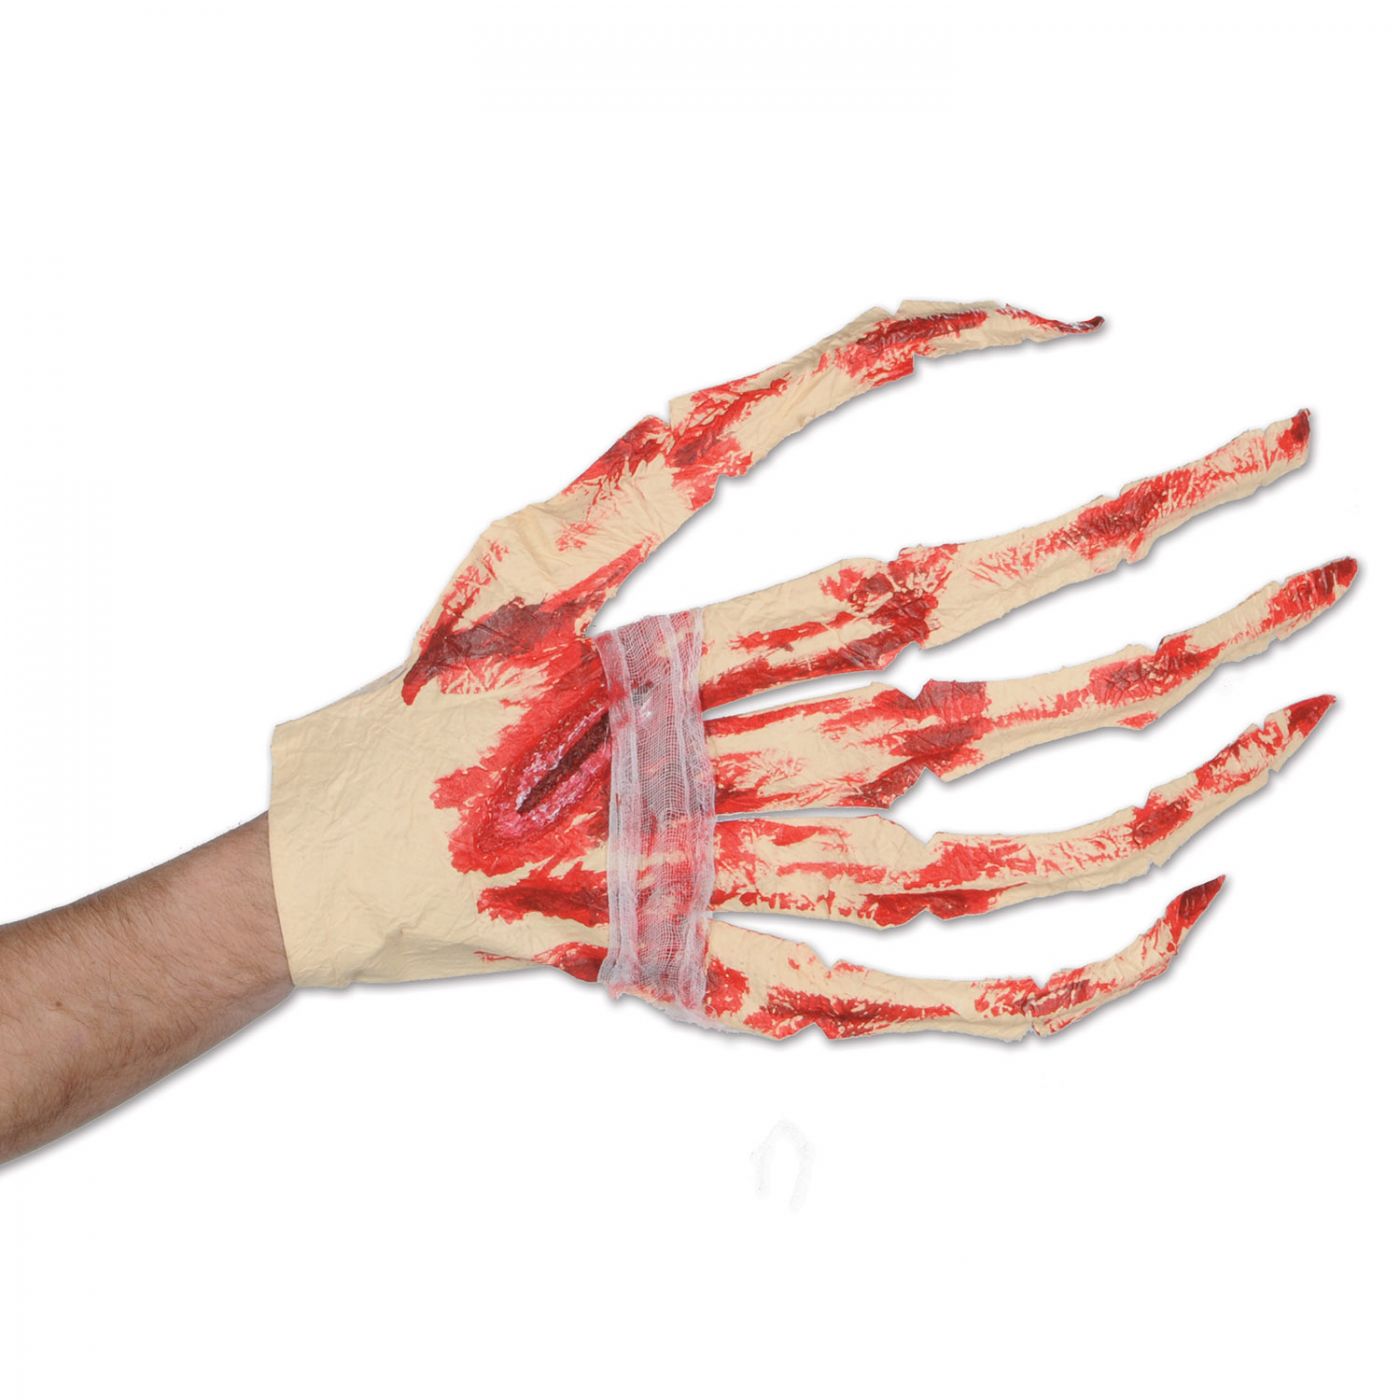 Bloody Glove (12) image